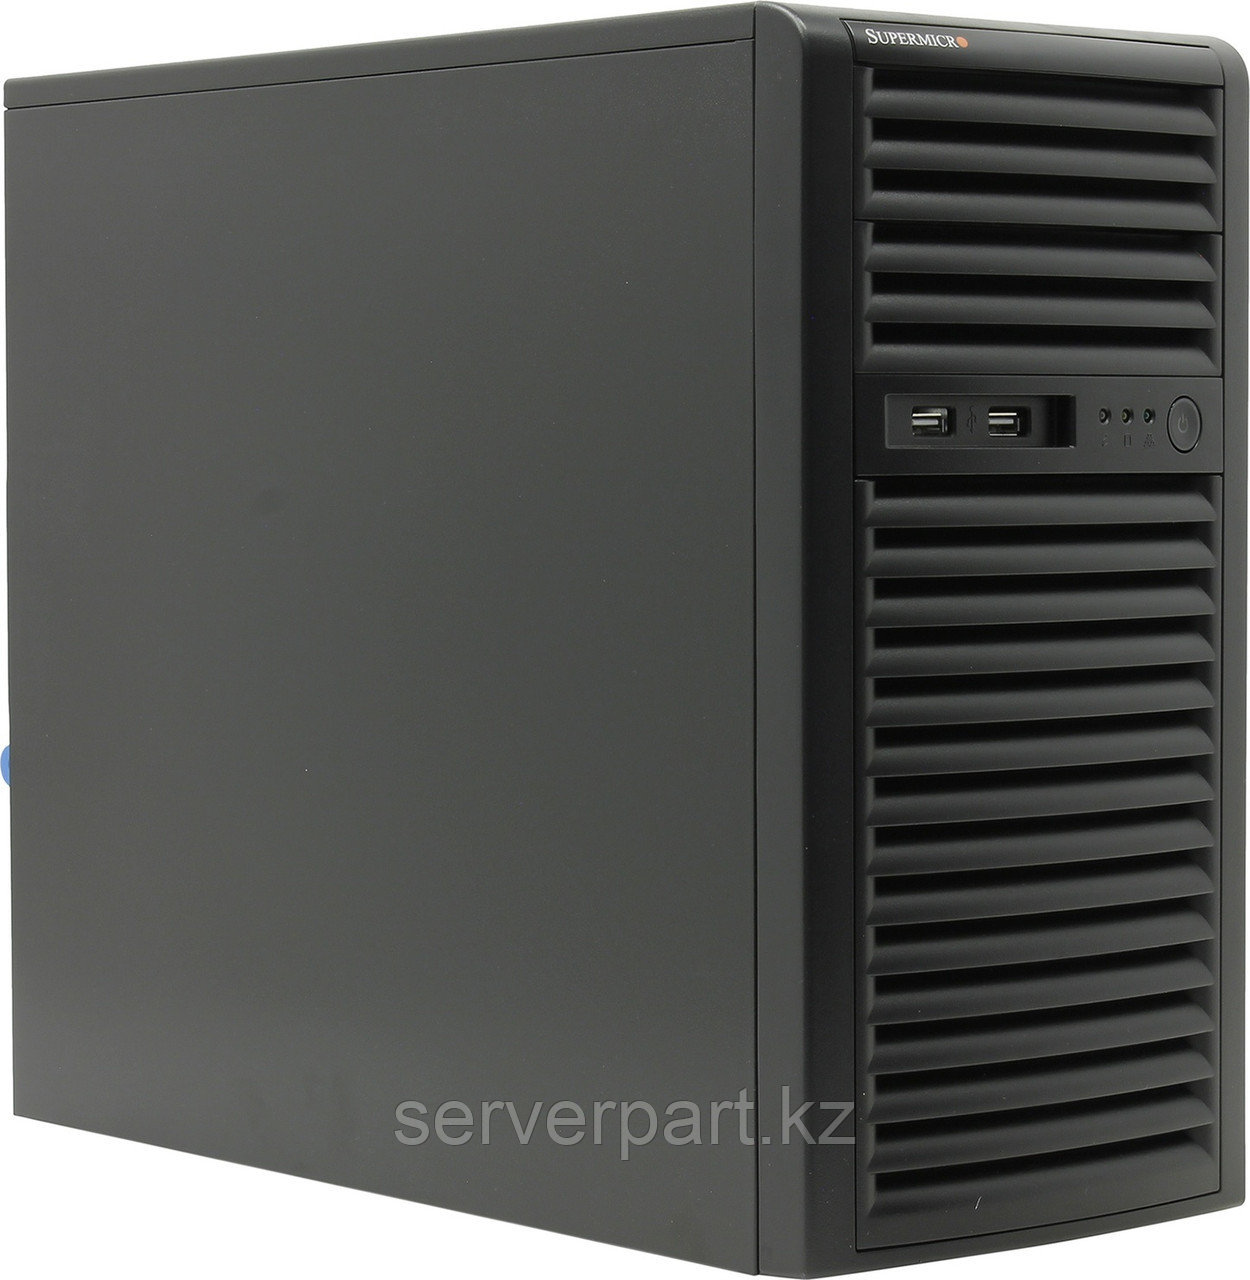 Сервер Supermicro SYS-5039C Tower 4LFF/4-core intel xeon E2124 3.3GHz/48GB UDIMM nECC/1x480GB SSD MU Hyb, фото 1